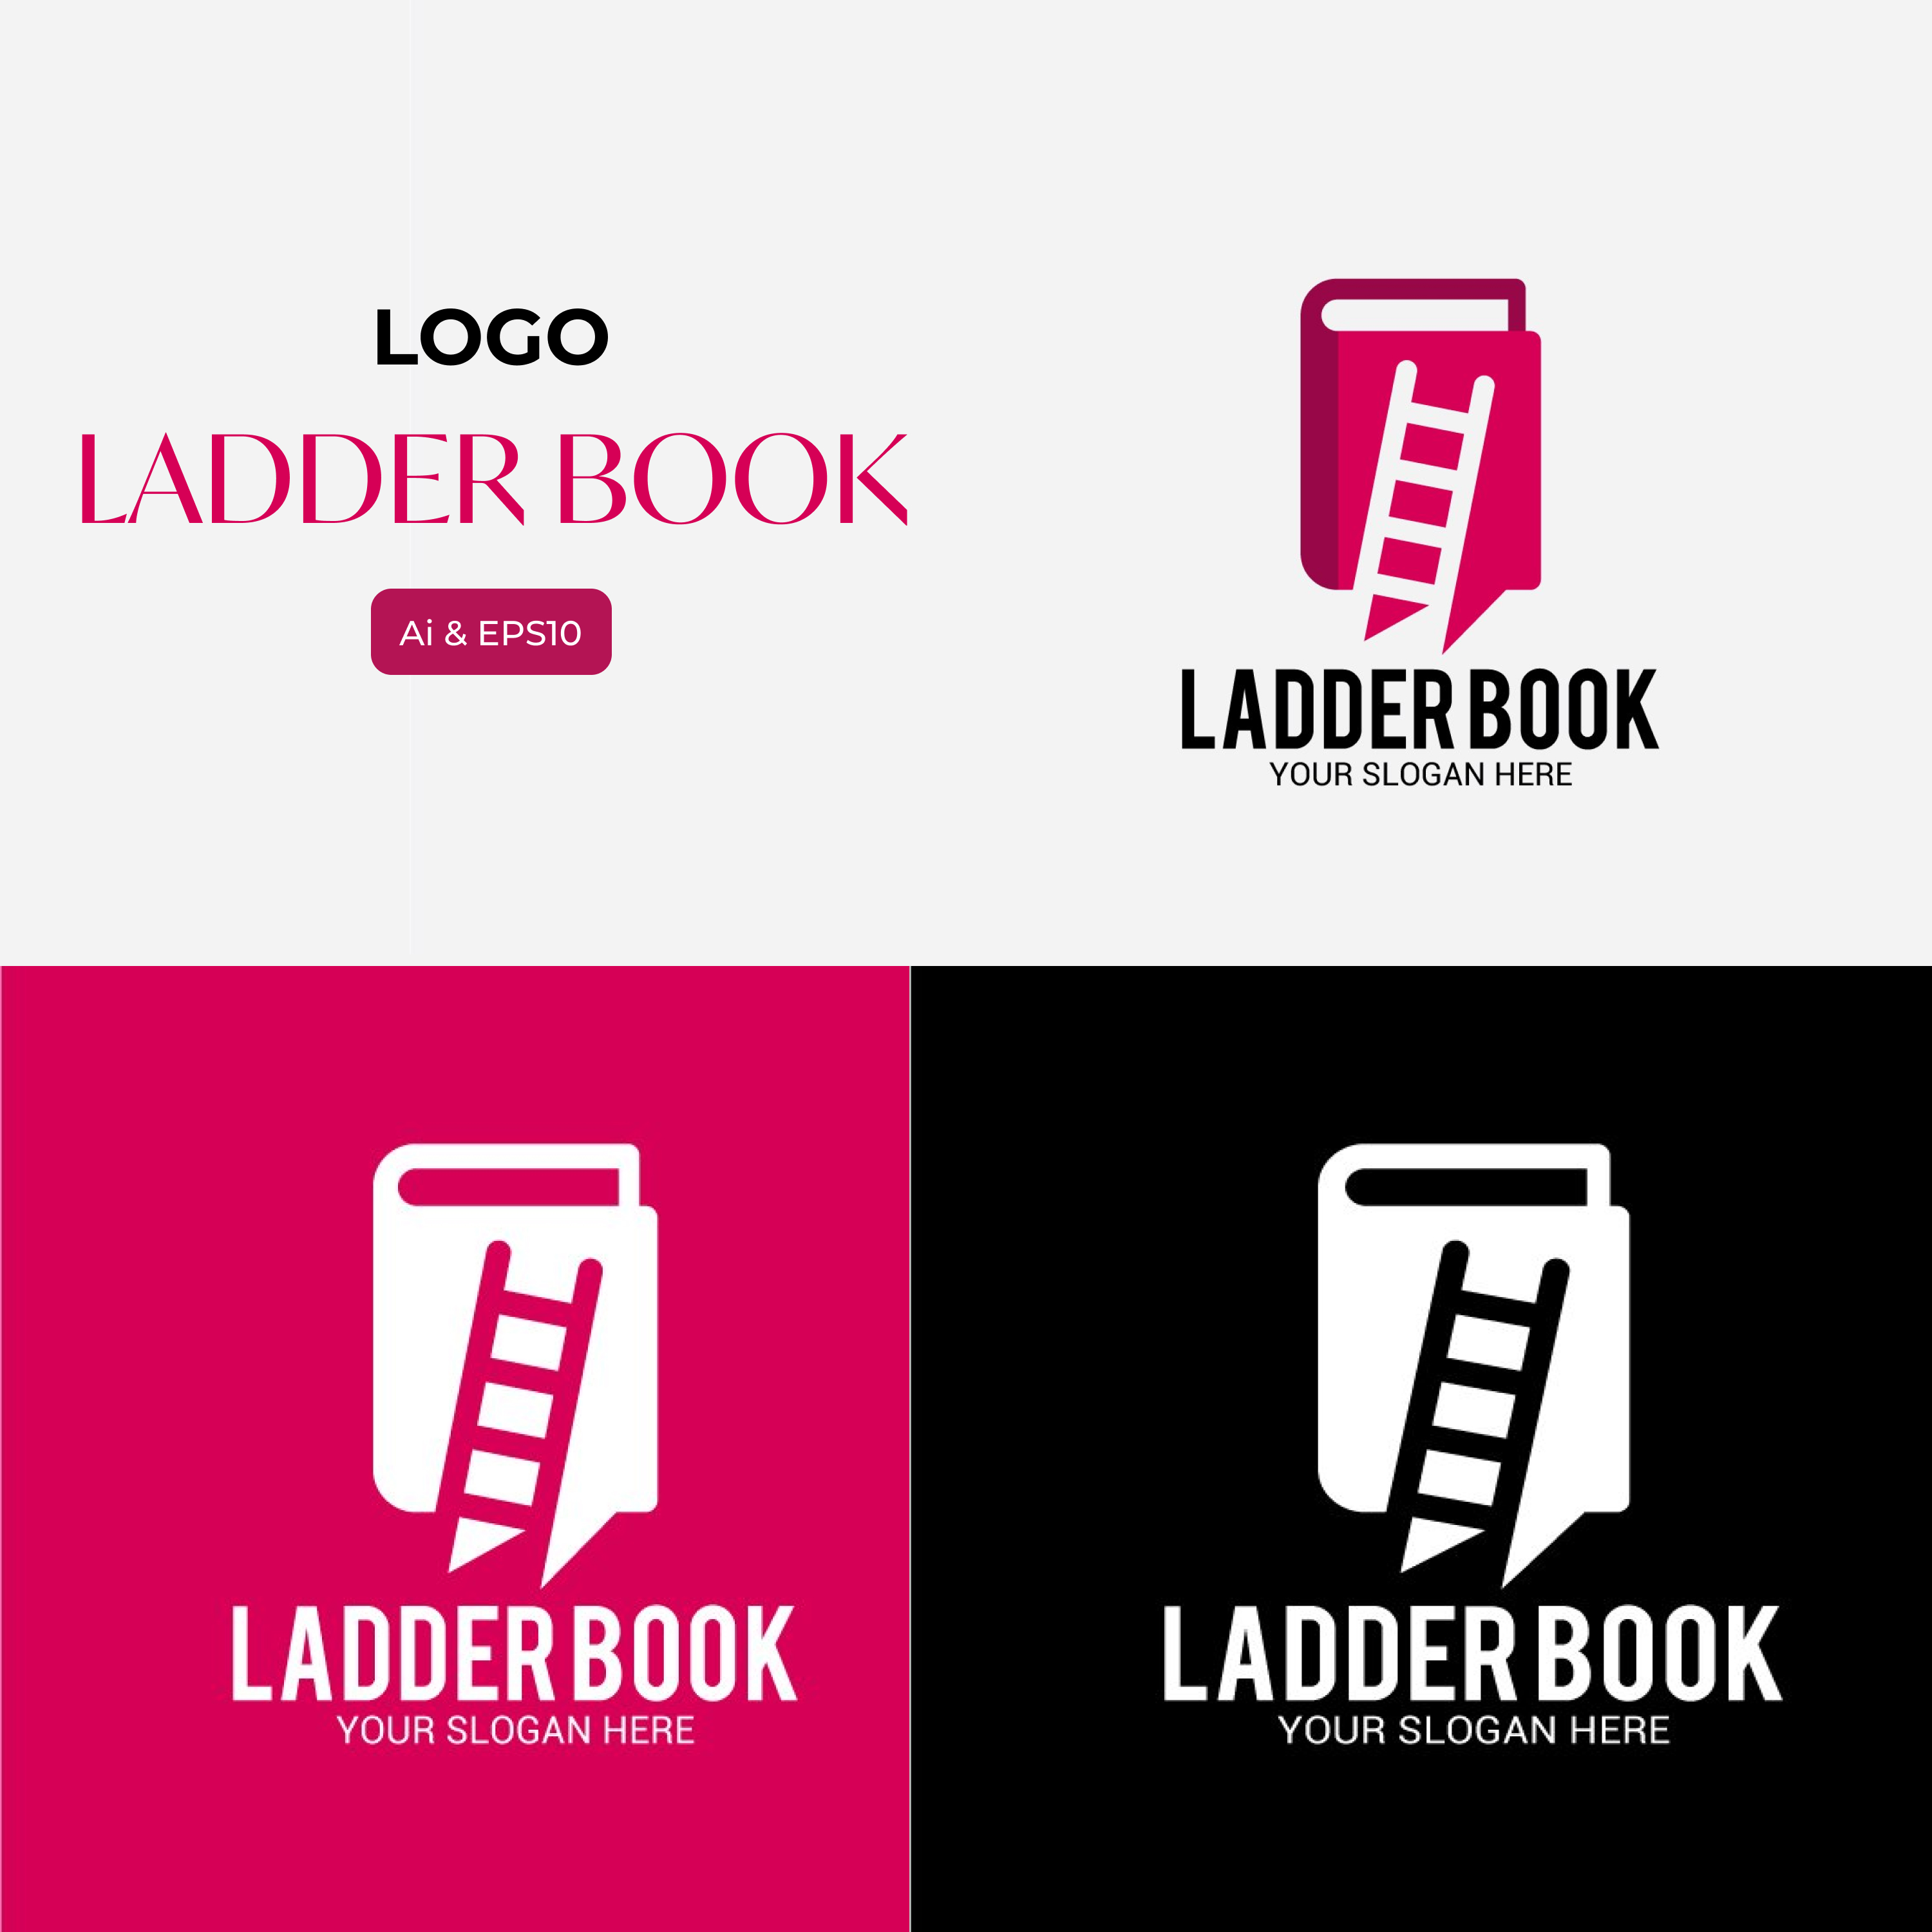 Prints of ladder book logo.